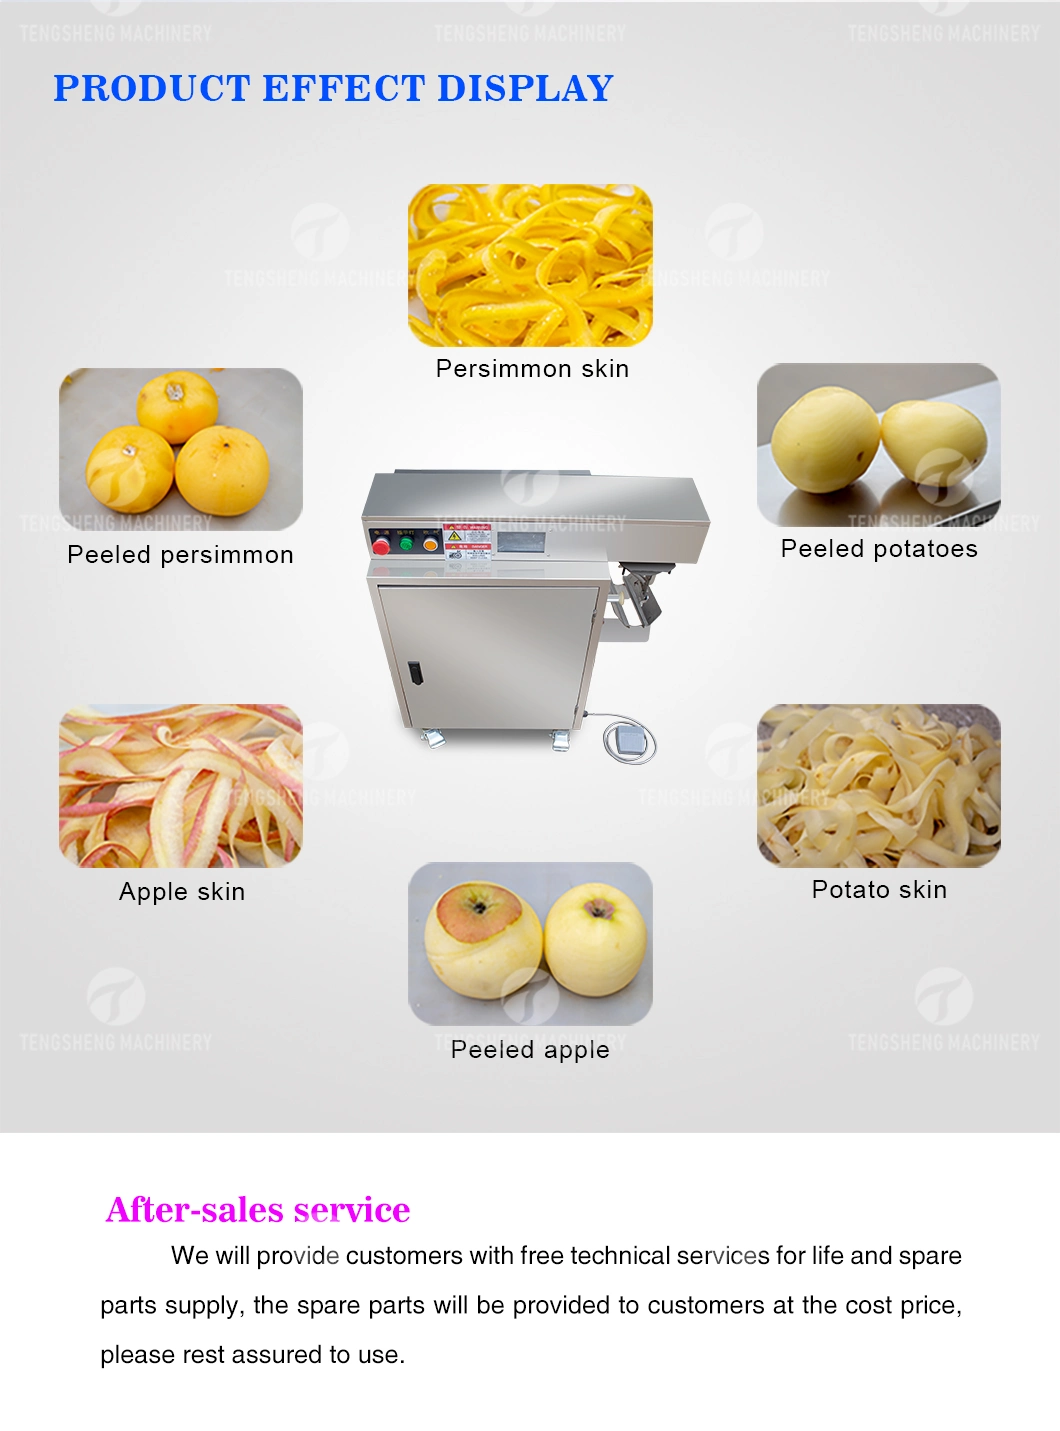 Persimmon Peeling Machine Peeler Potato Skiving Machine Food Processor (TS-P18S)